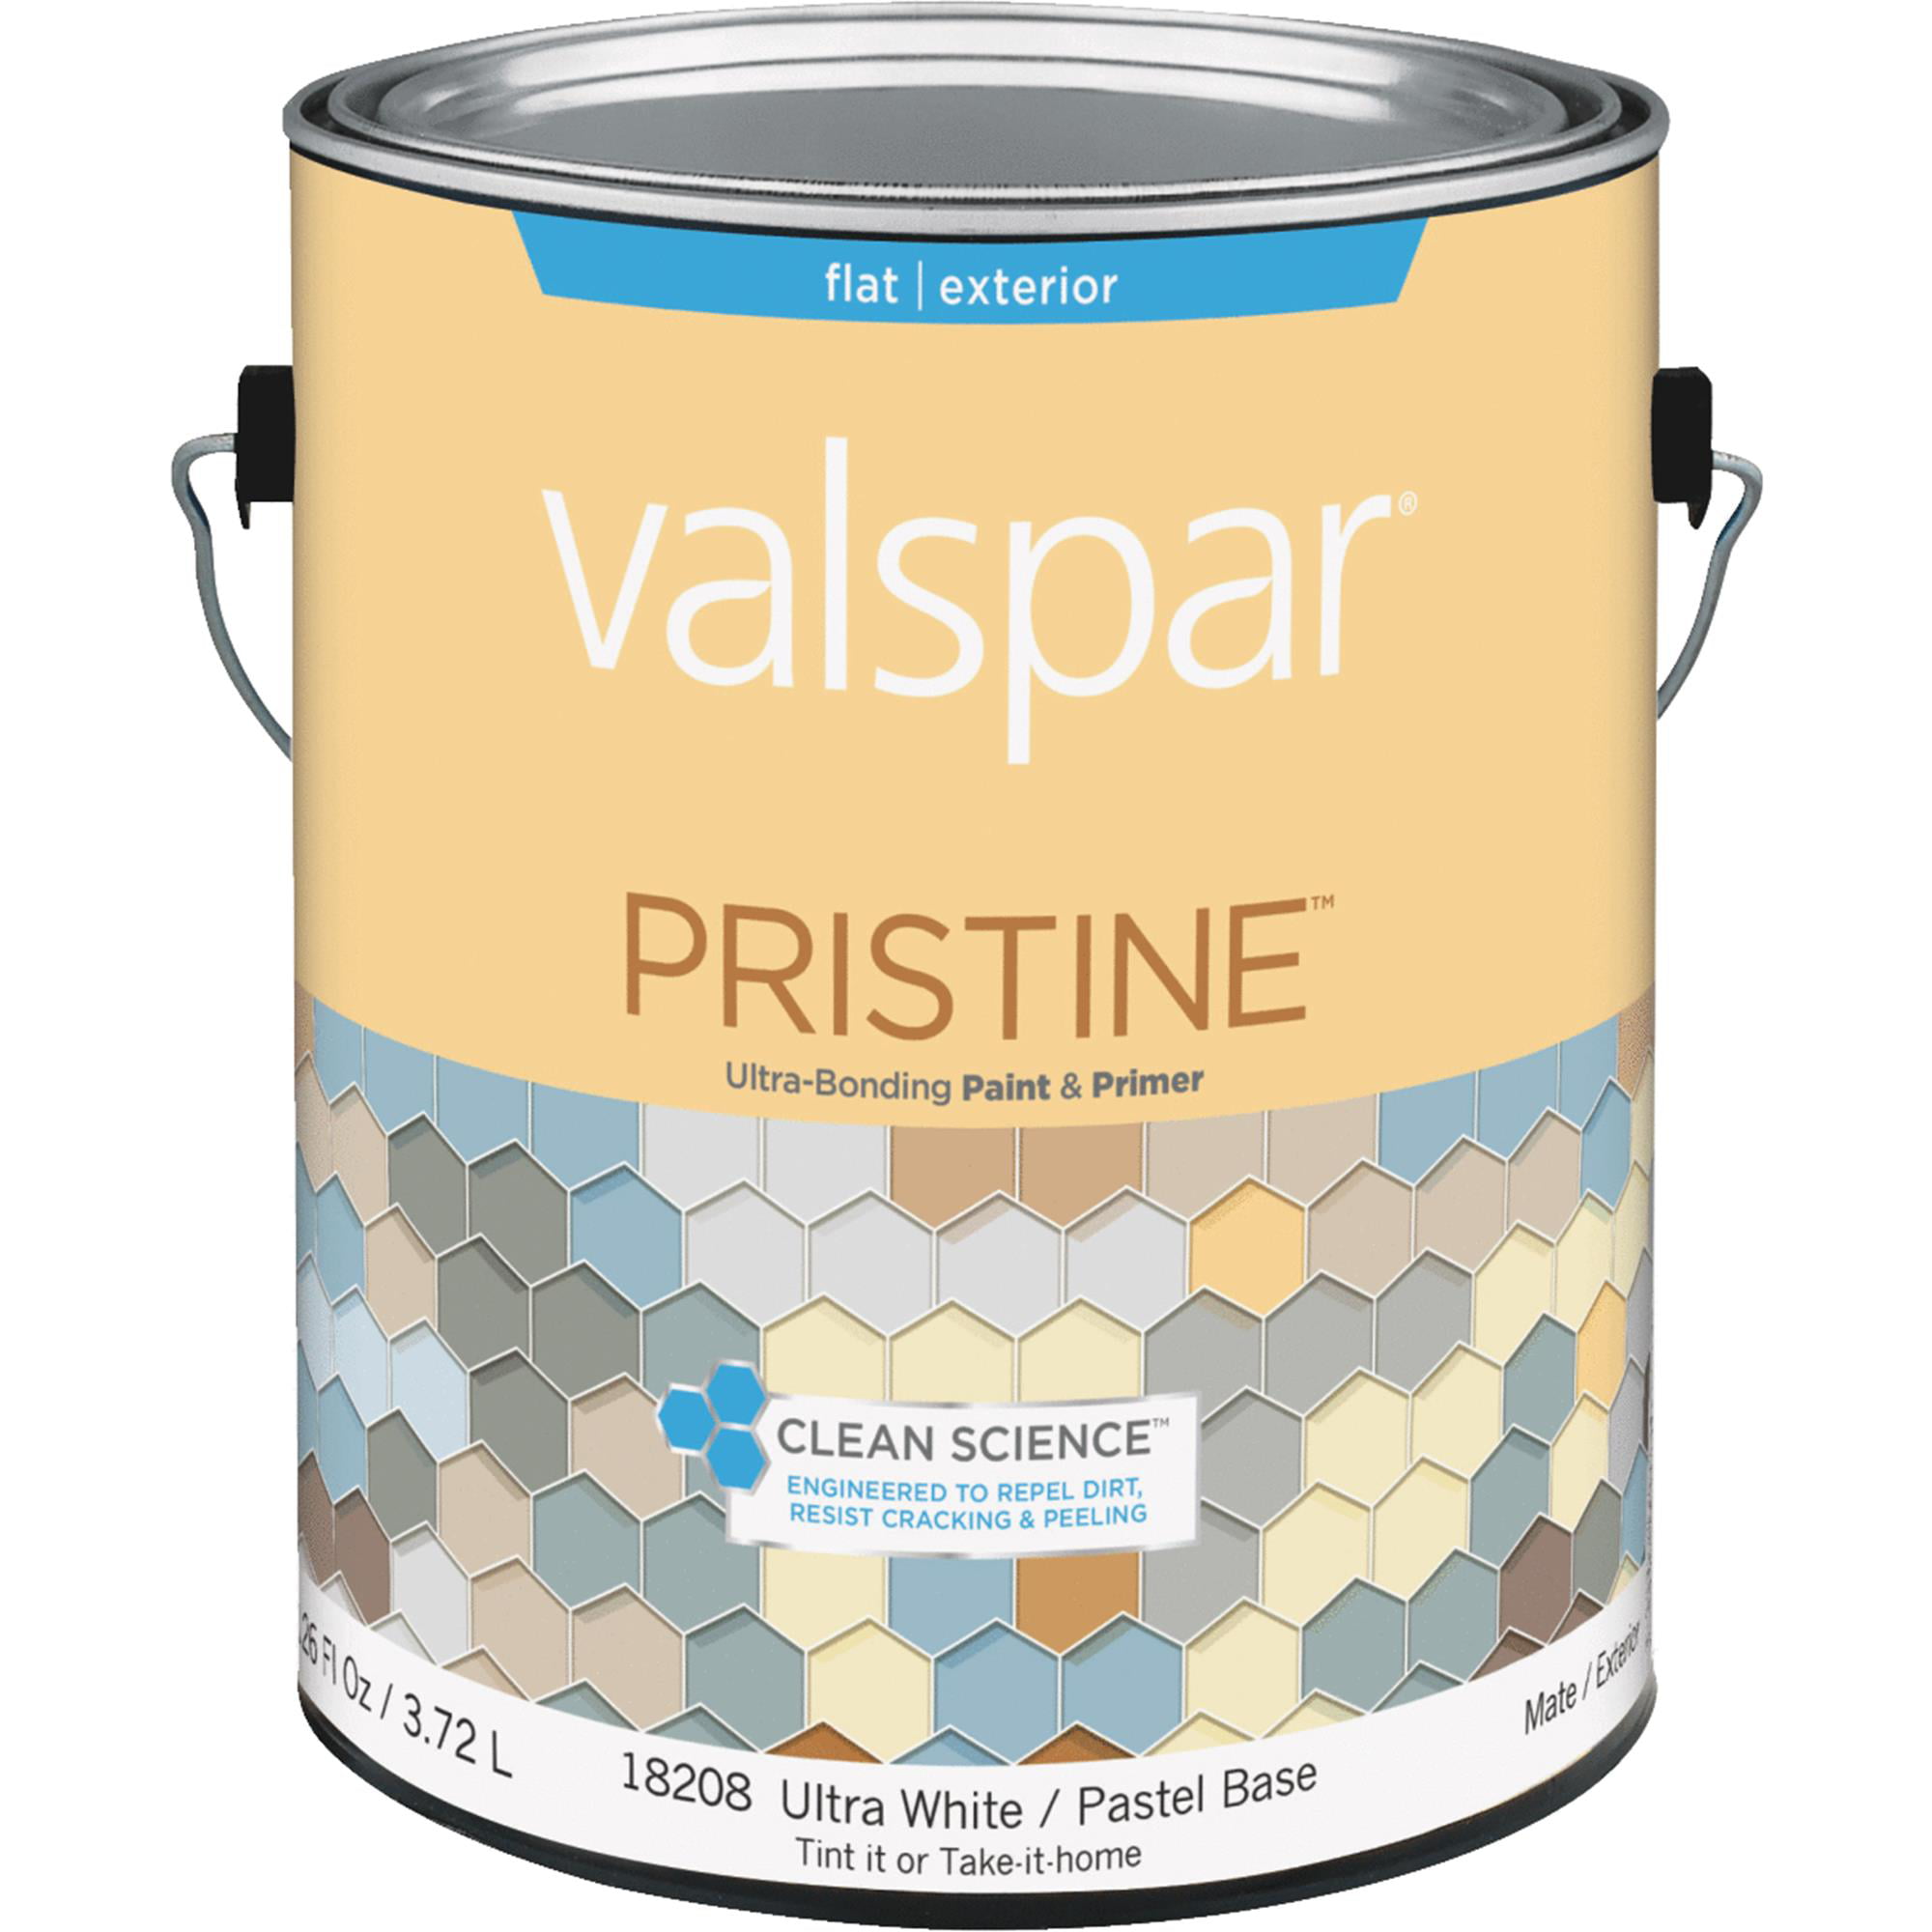 valspar-valspar-pristine-100-acrylic-paint-primer-flat-exterior